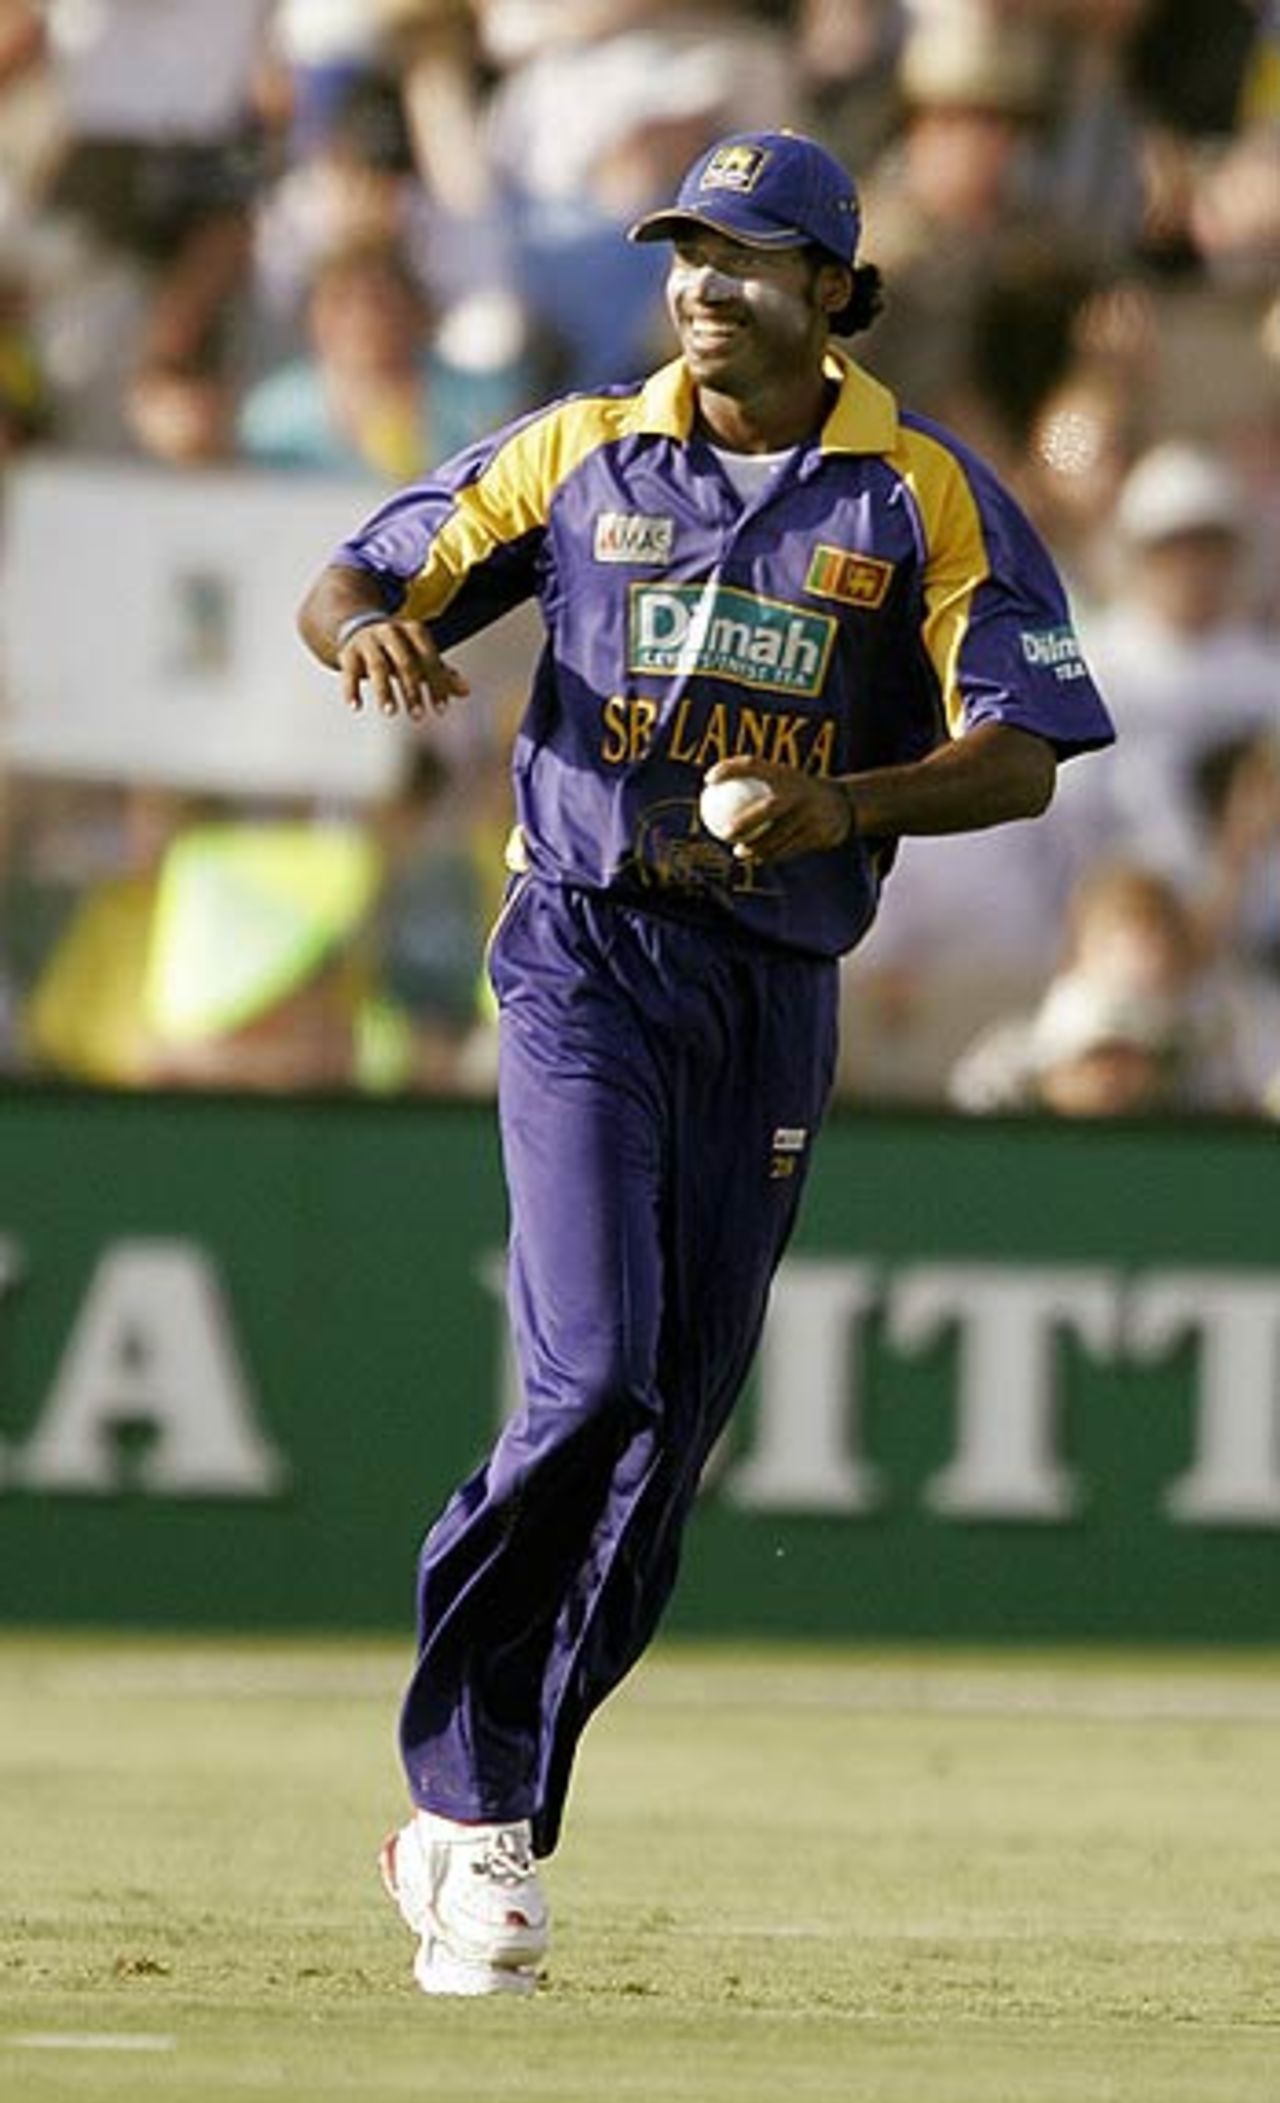 Akalanka Ganegama took an easy catch to dismiss Adam Gilchrist, Australia v Sri Lanka, 7th match, VB Series, Adelaide, January 26, 2006